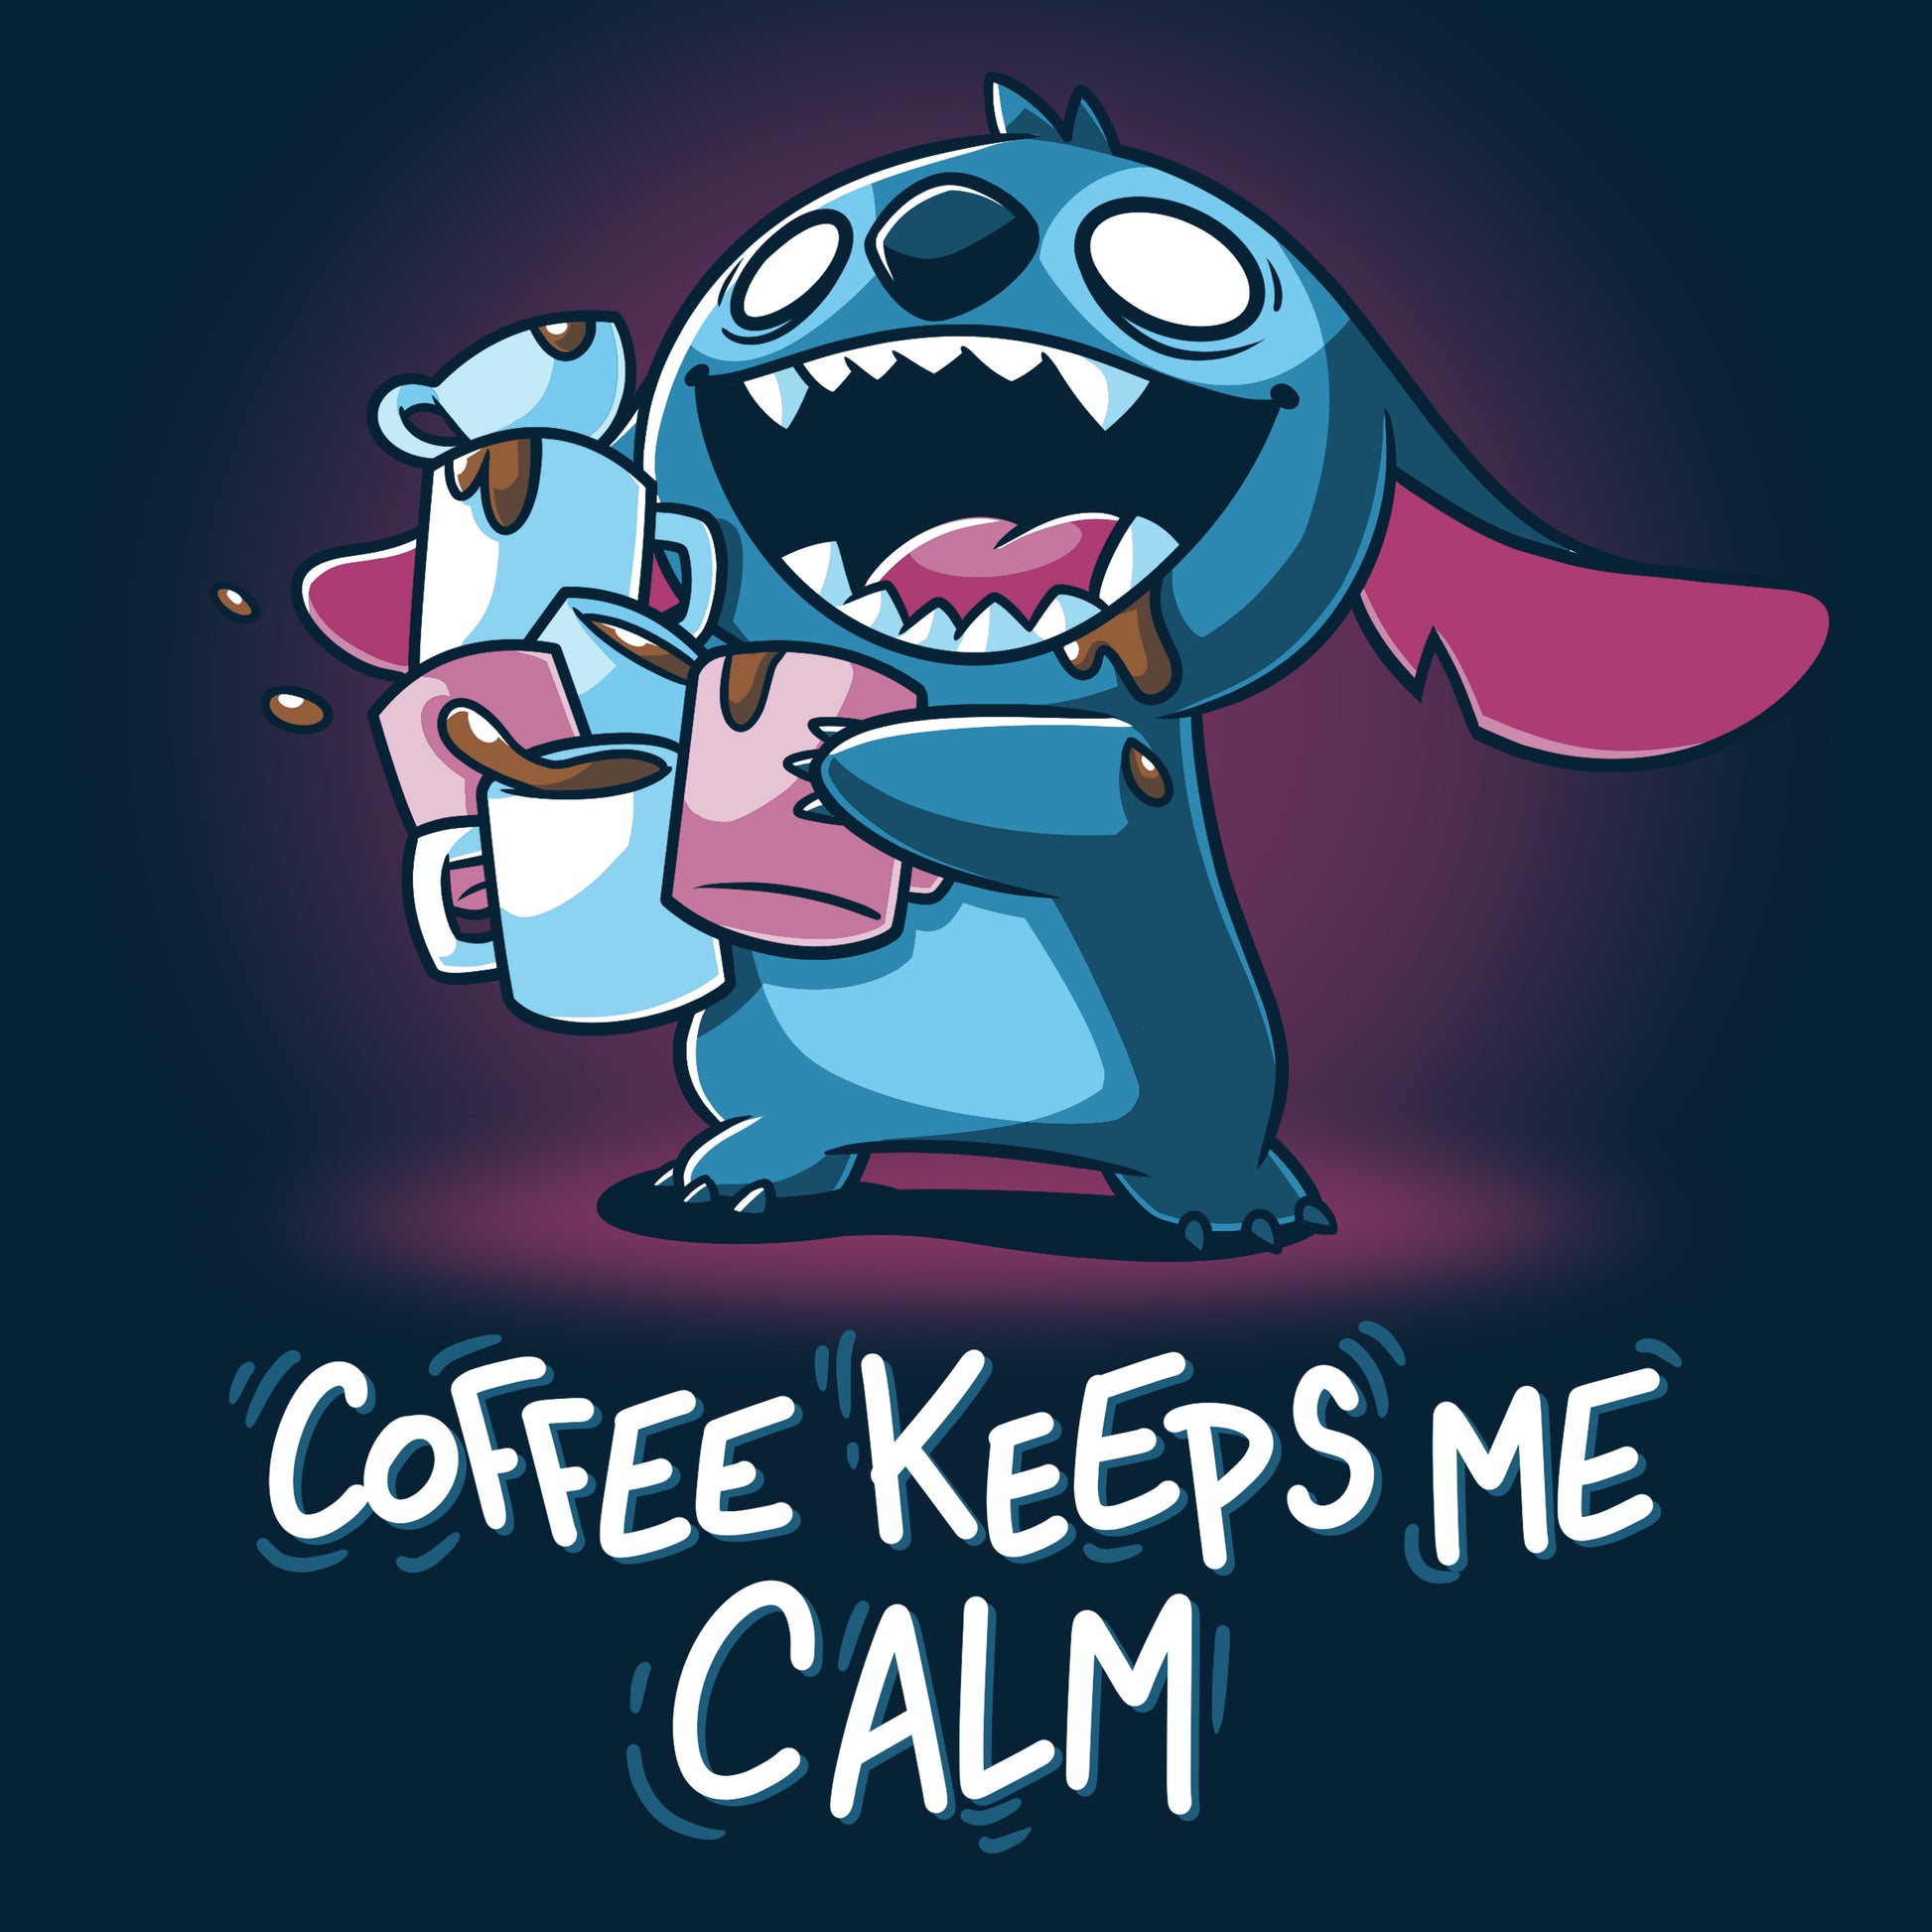 Disney's Coffee Keeps Me Calm (Stitch) keeps me calm.